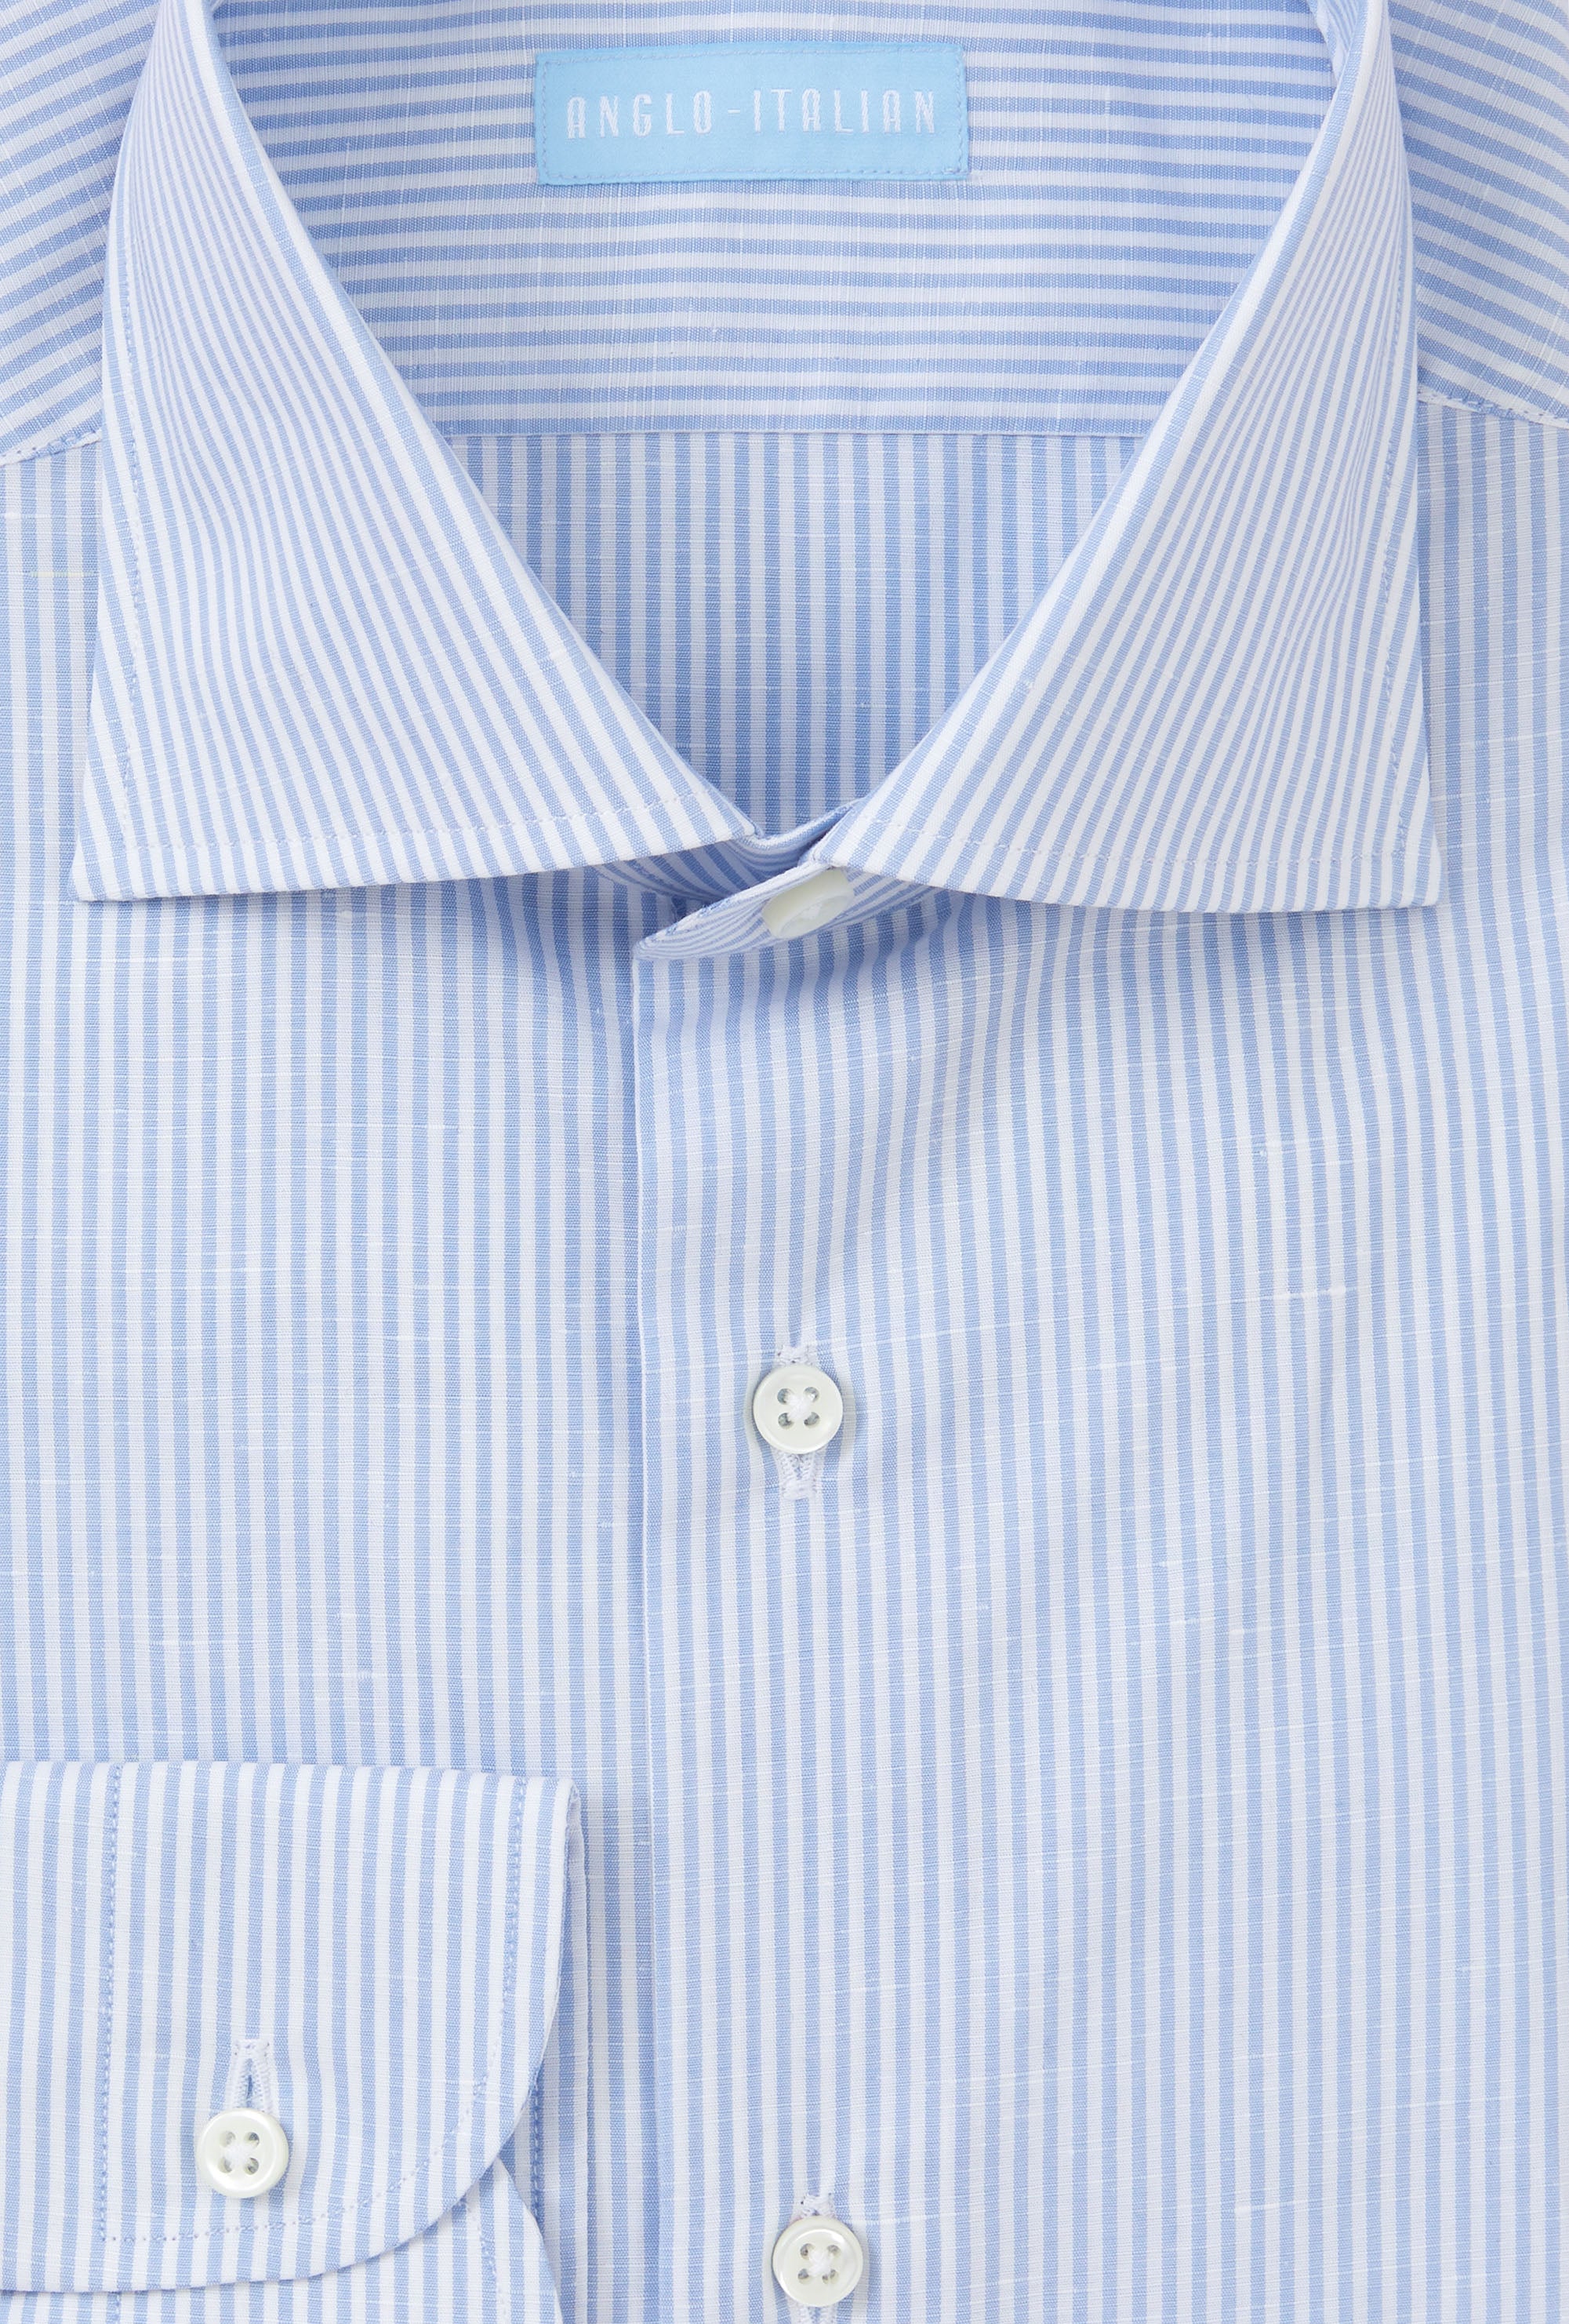 Spread Collar Shirt Zephyr Cotton-Linen University Stripe